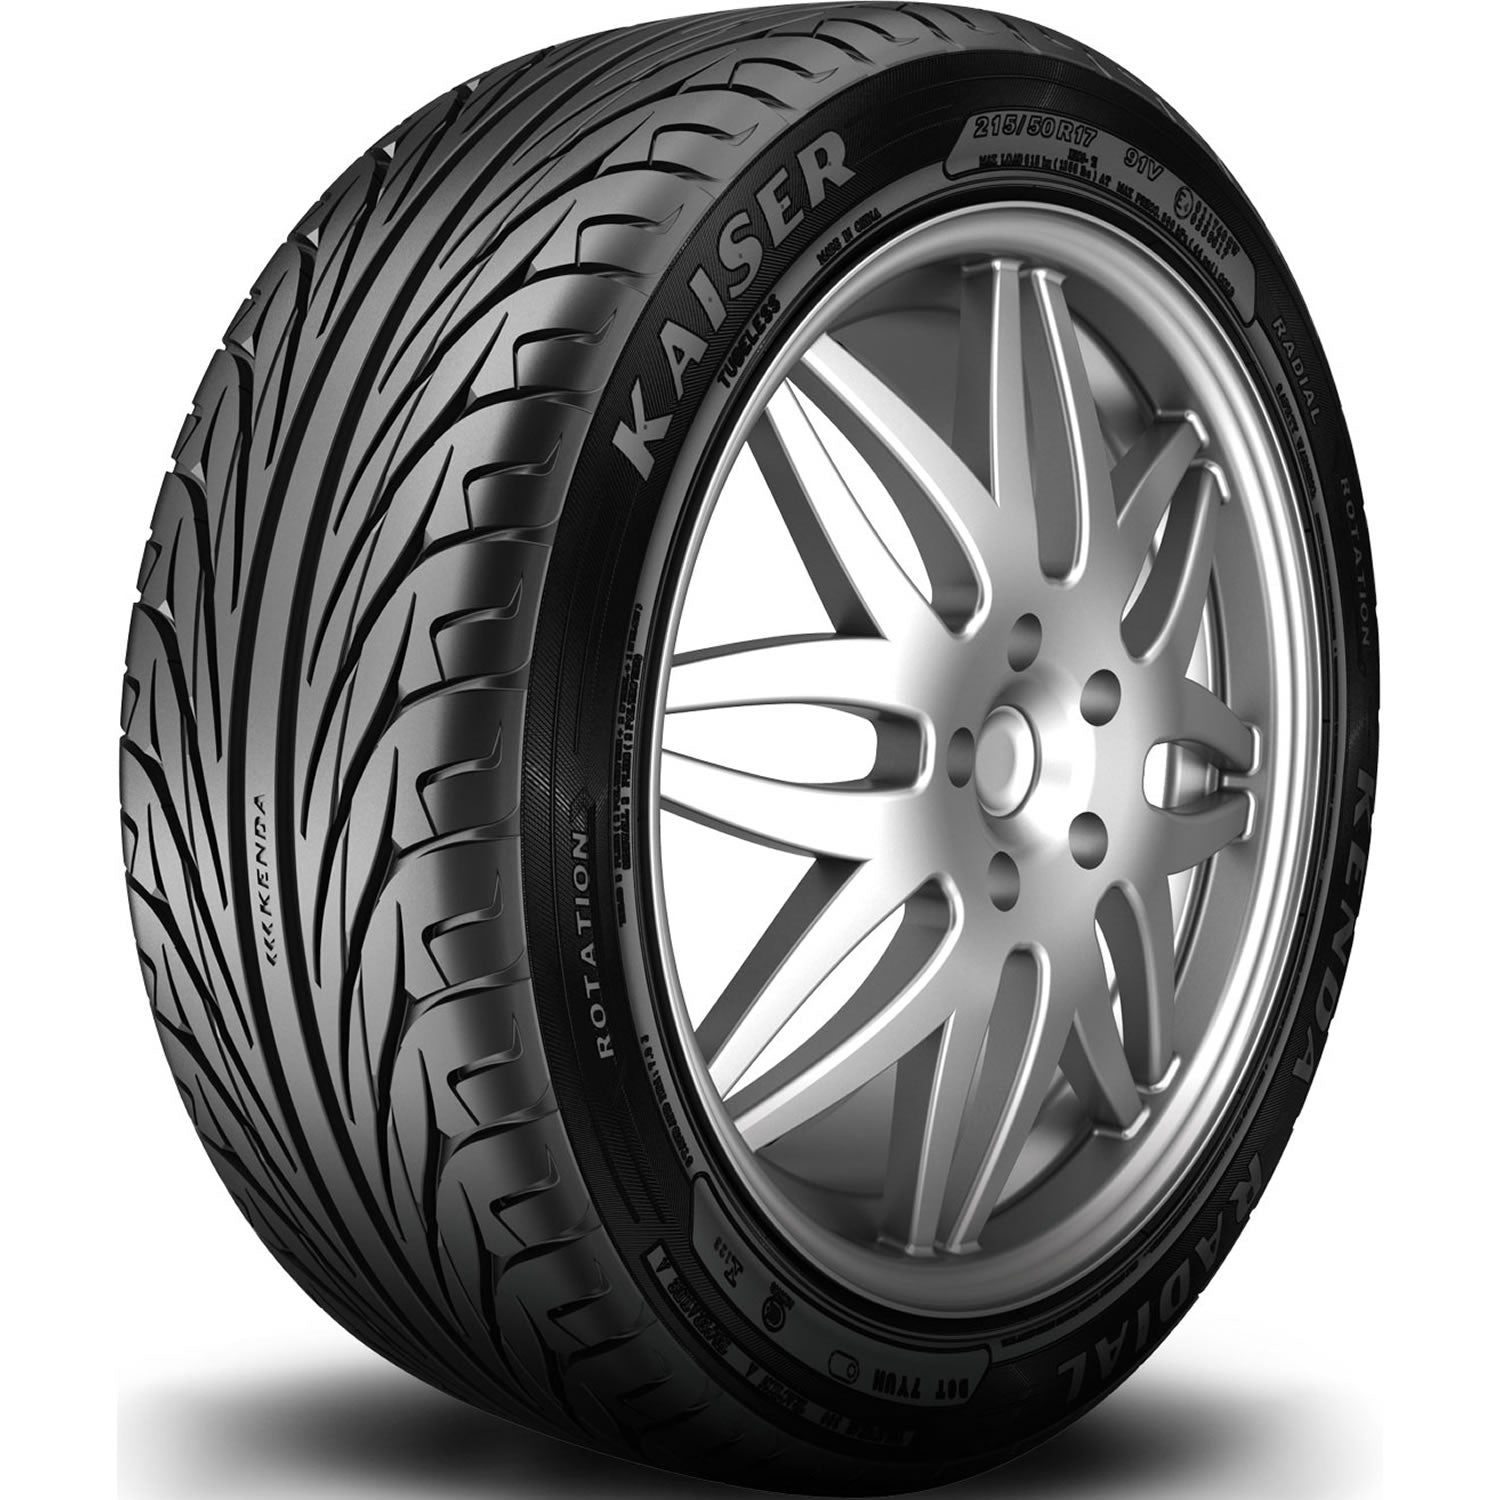 KENDA KAISER 235/45ZR17 (25.4X9.4R 17) Tires